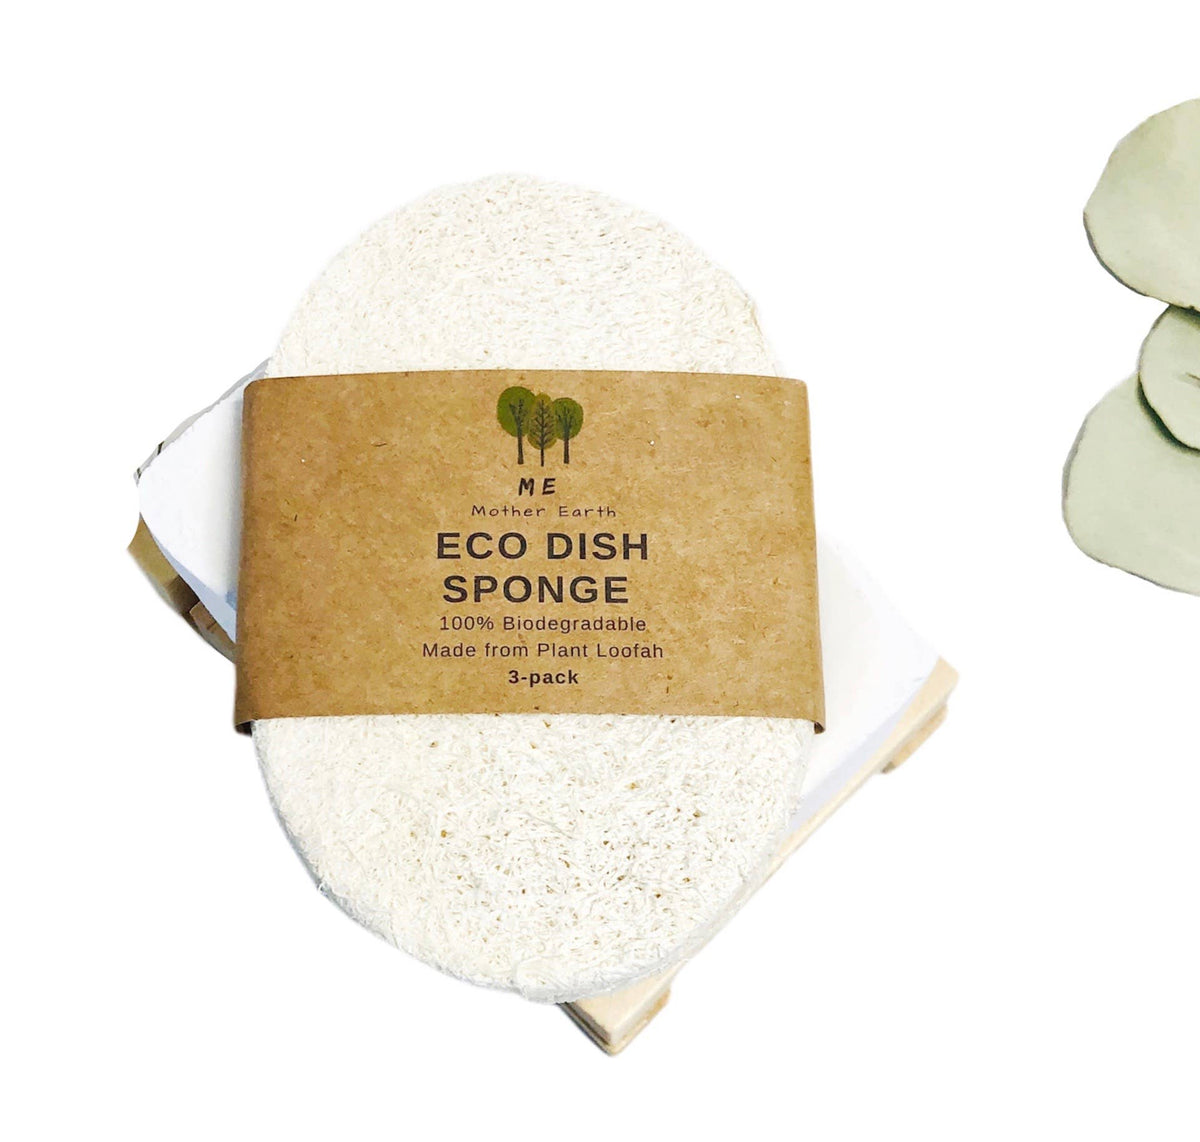 Eco dish sponge 3-Pack